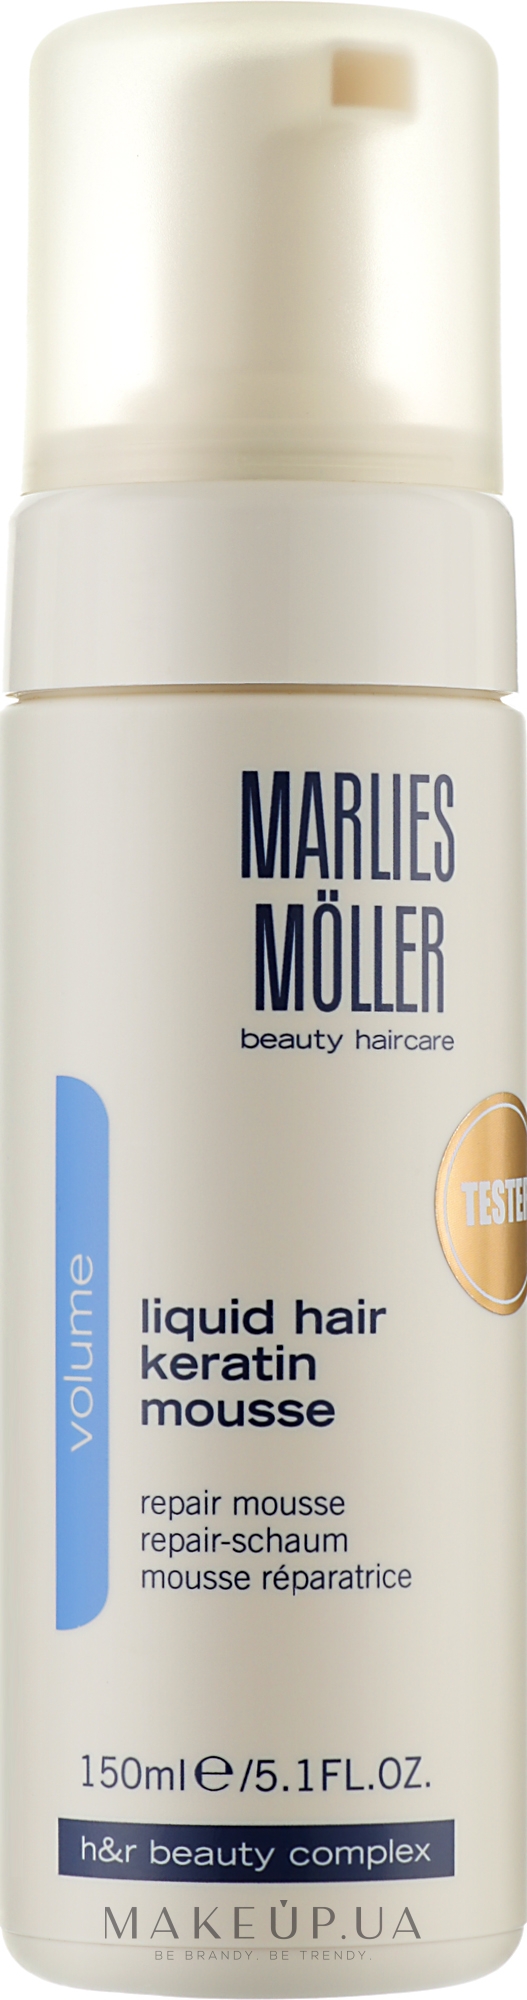 Мусс восстанавливающий структуру волос "Жидкий кератин" - Marlies Moller Volume Liquid Hair Keratin Mousse (тестер) — фото 150ml